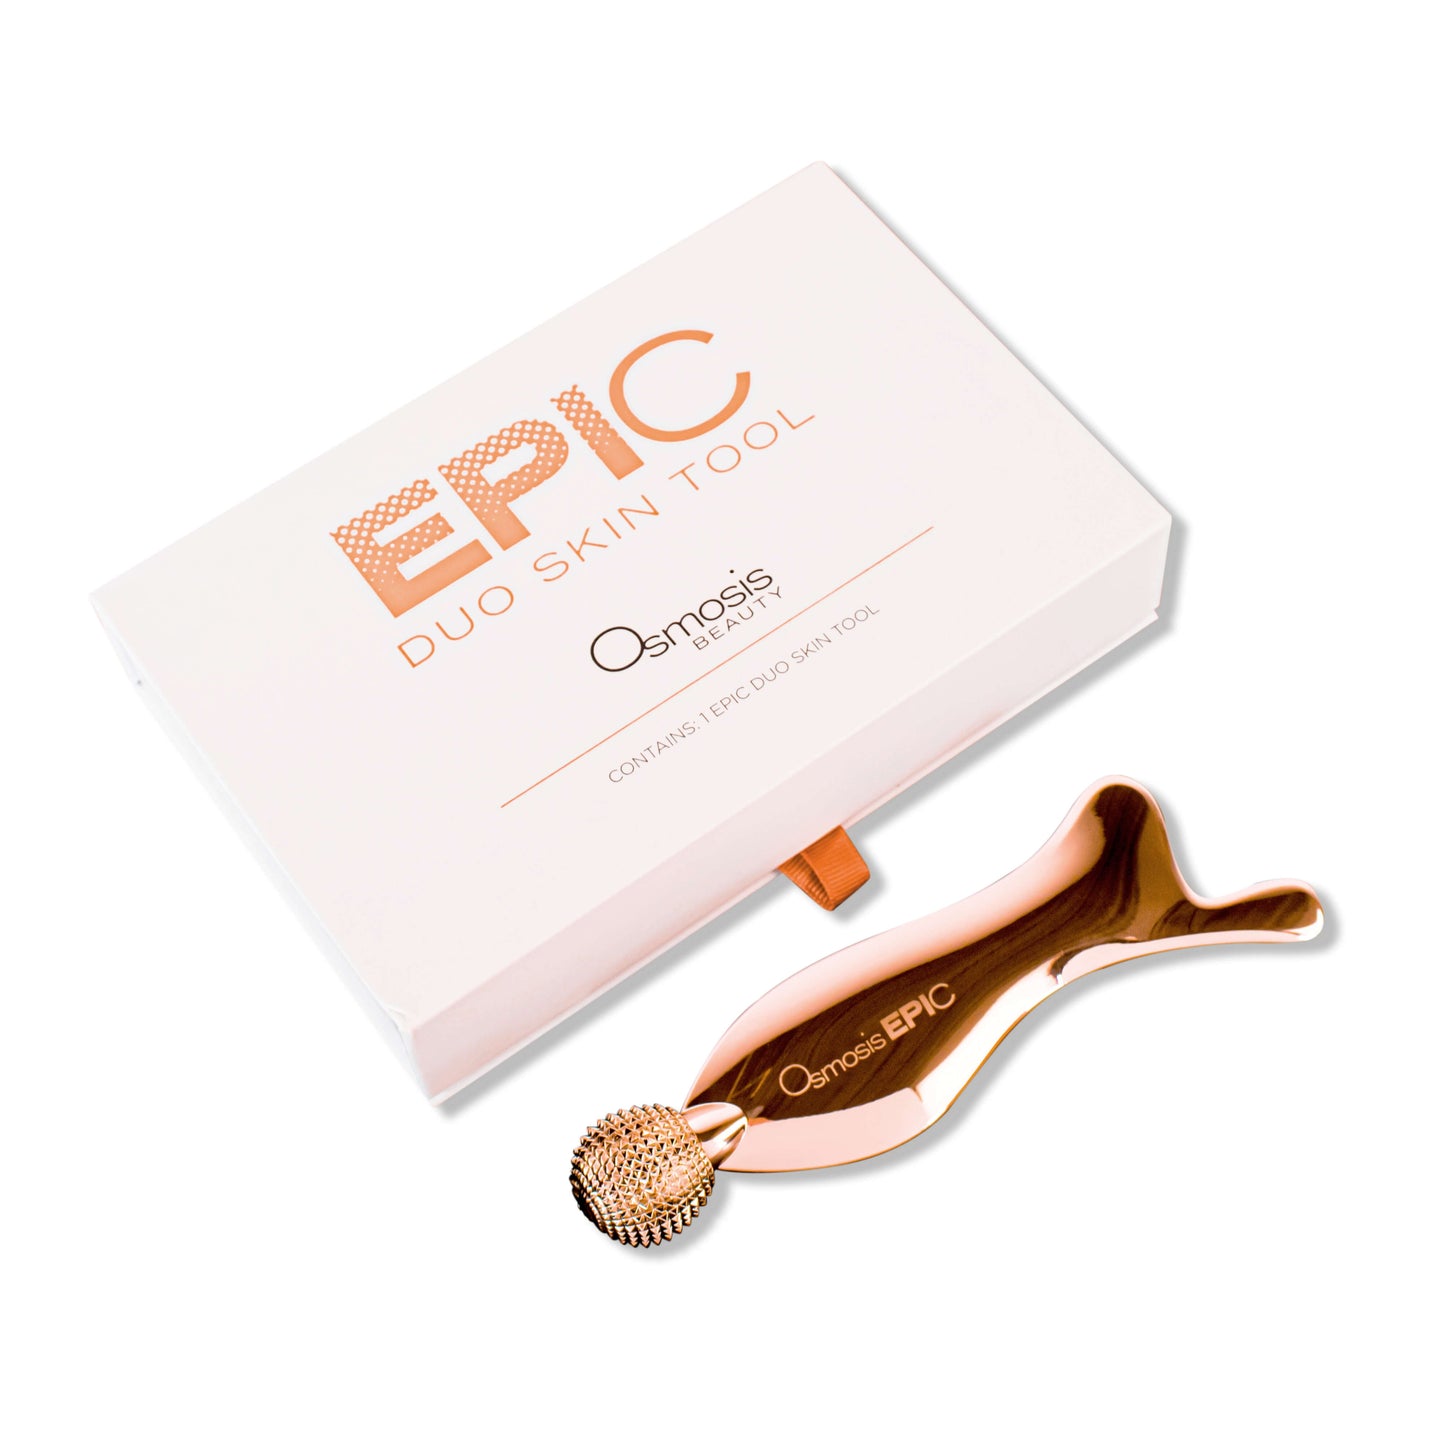 Epic Duo Skin Tool - Gua Sha & Epic Skin Tool Combo__Osmosis Beauty Skincare & Wellness Supplements